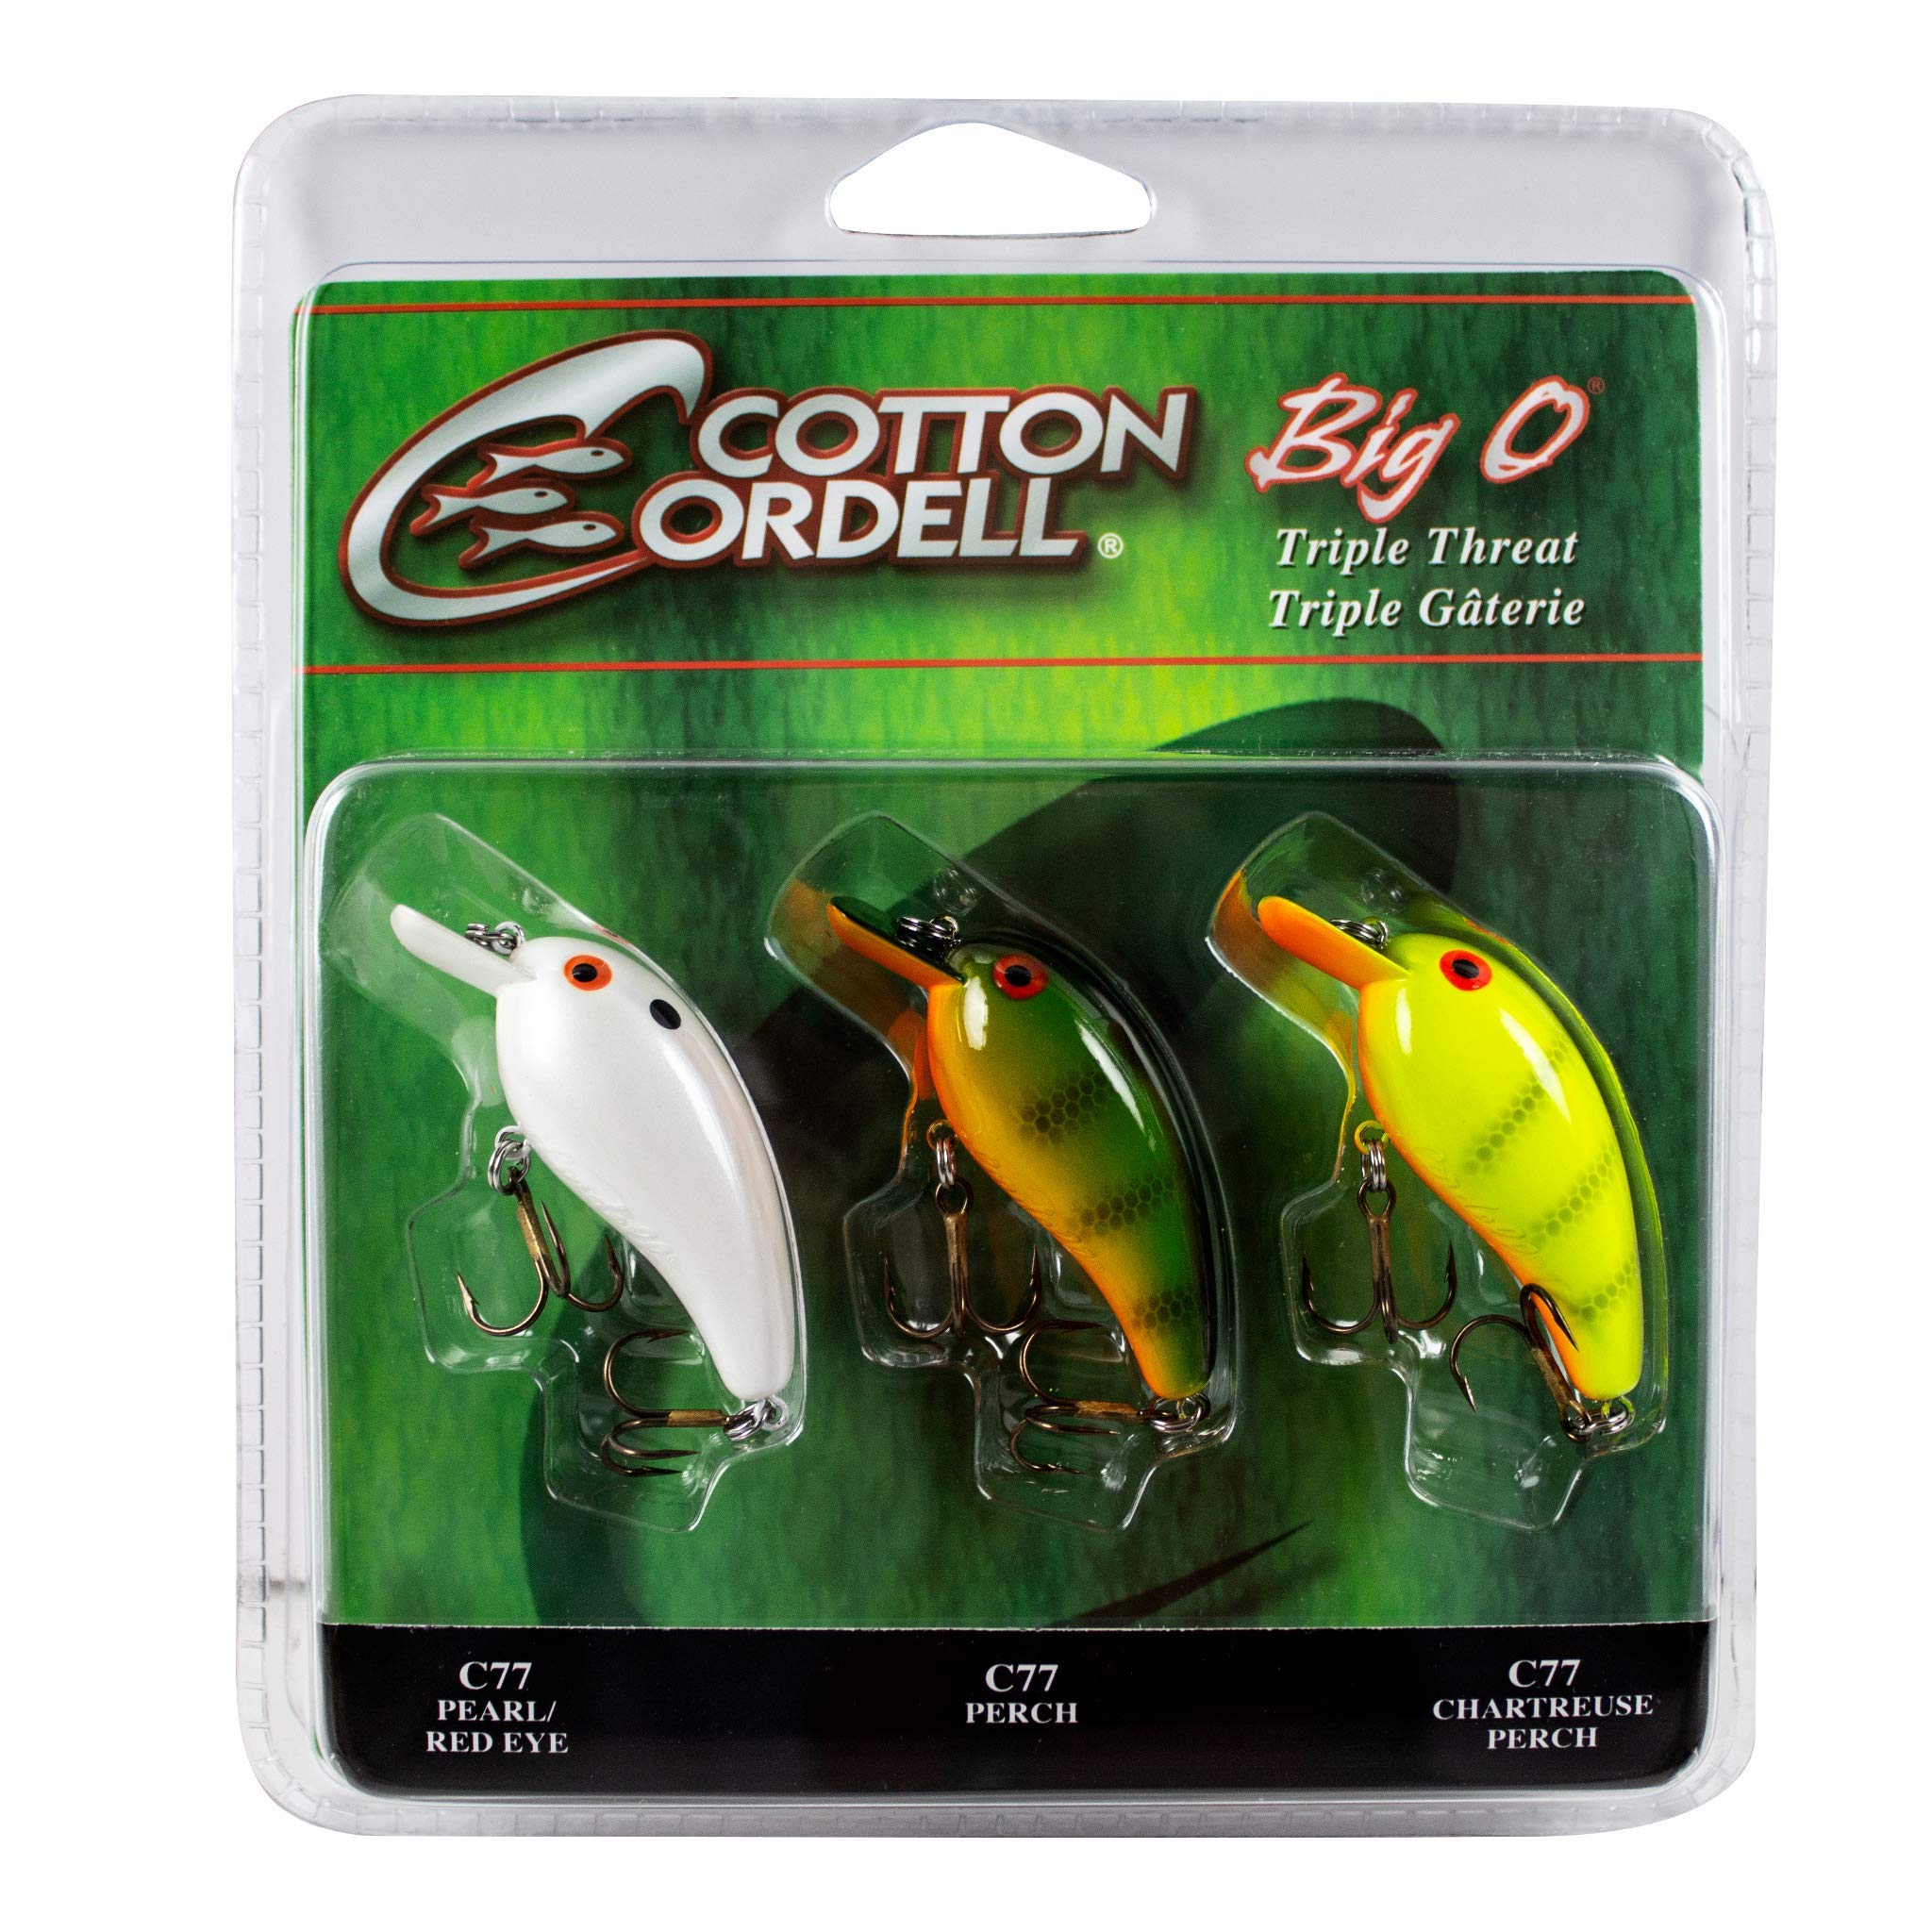 Cotton Cordell Big O Square-Lip Crankbait Fishing Lure 2, 1/4 oz Triple  Threat 3-Pack